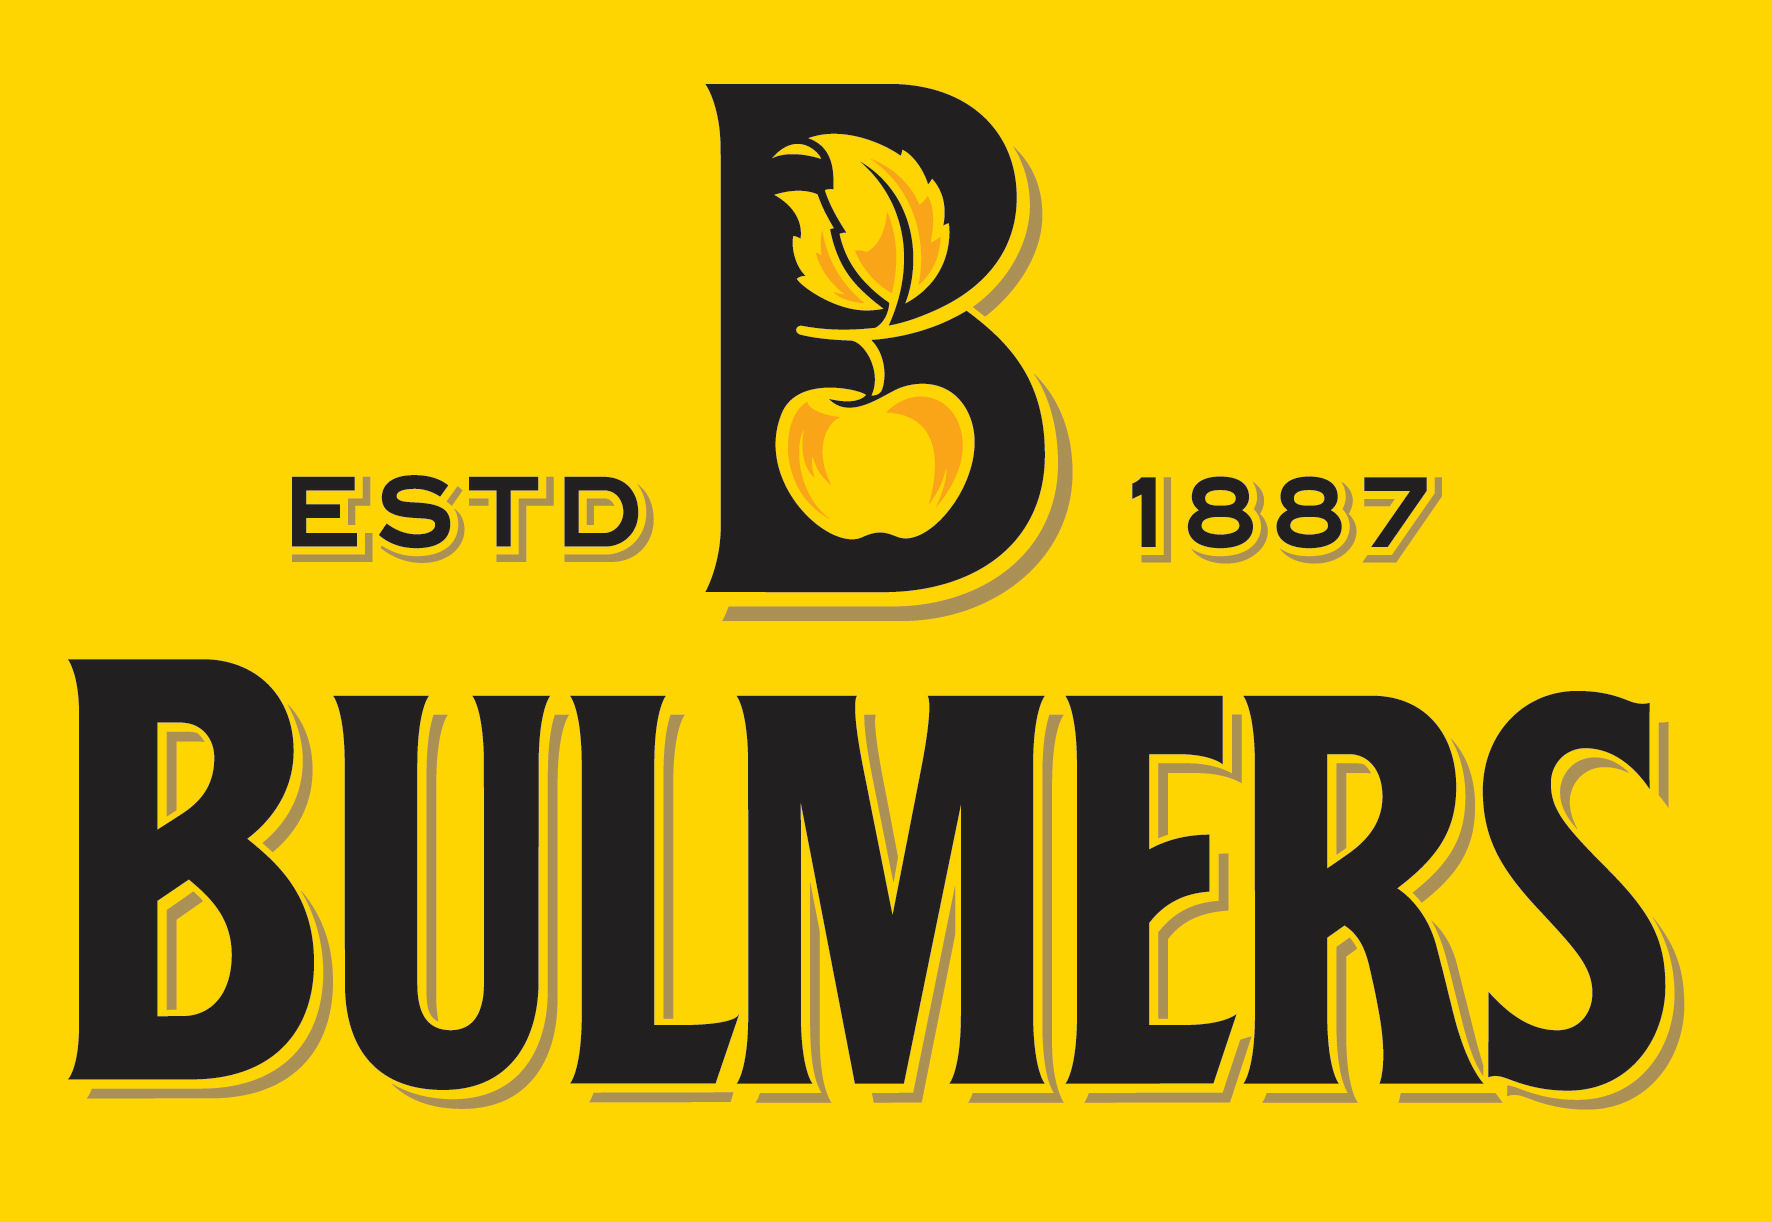 bulmers-cider-logo.jpg